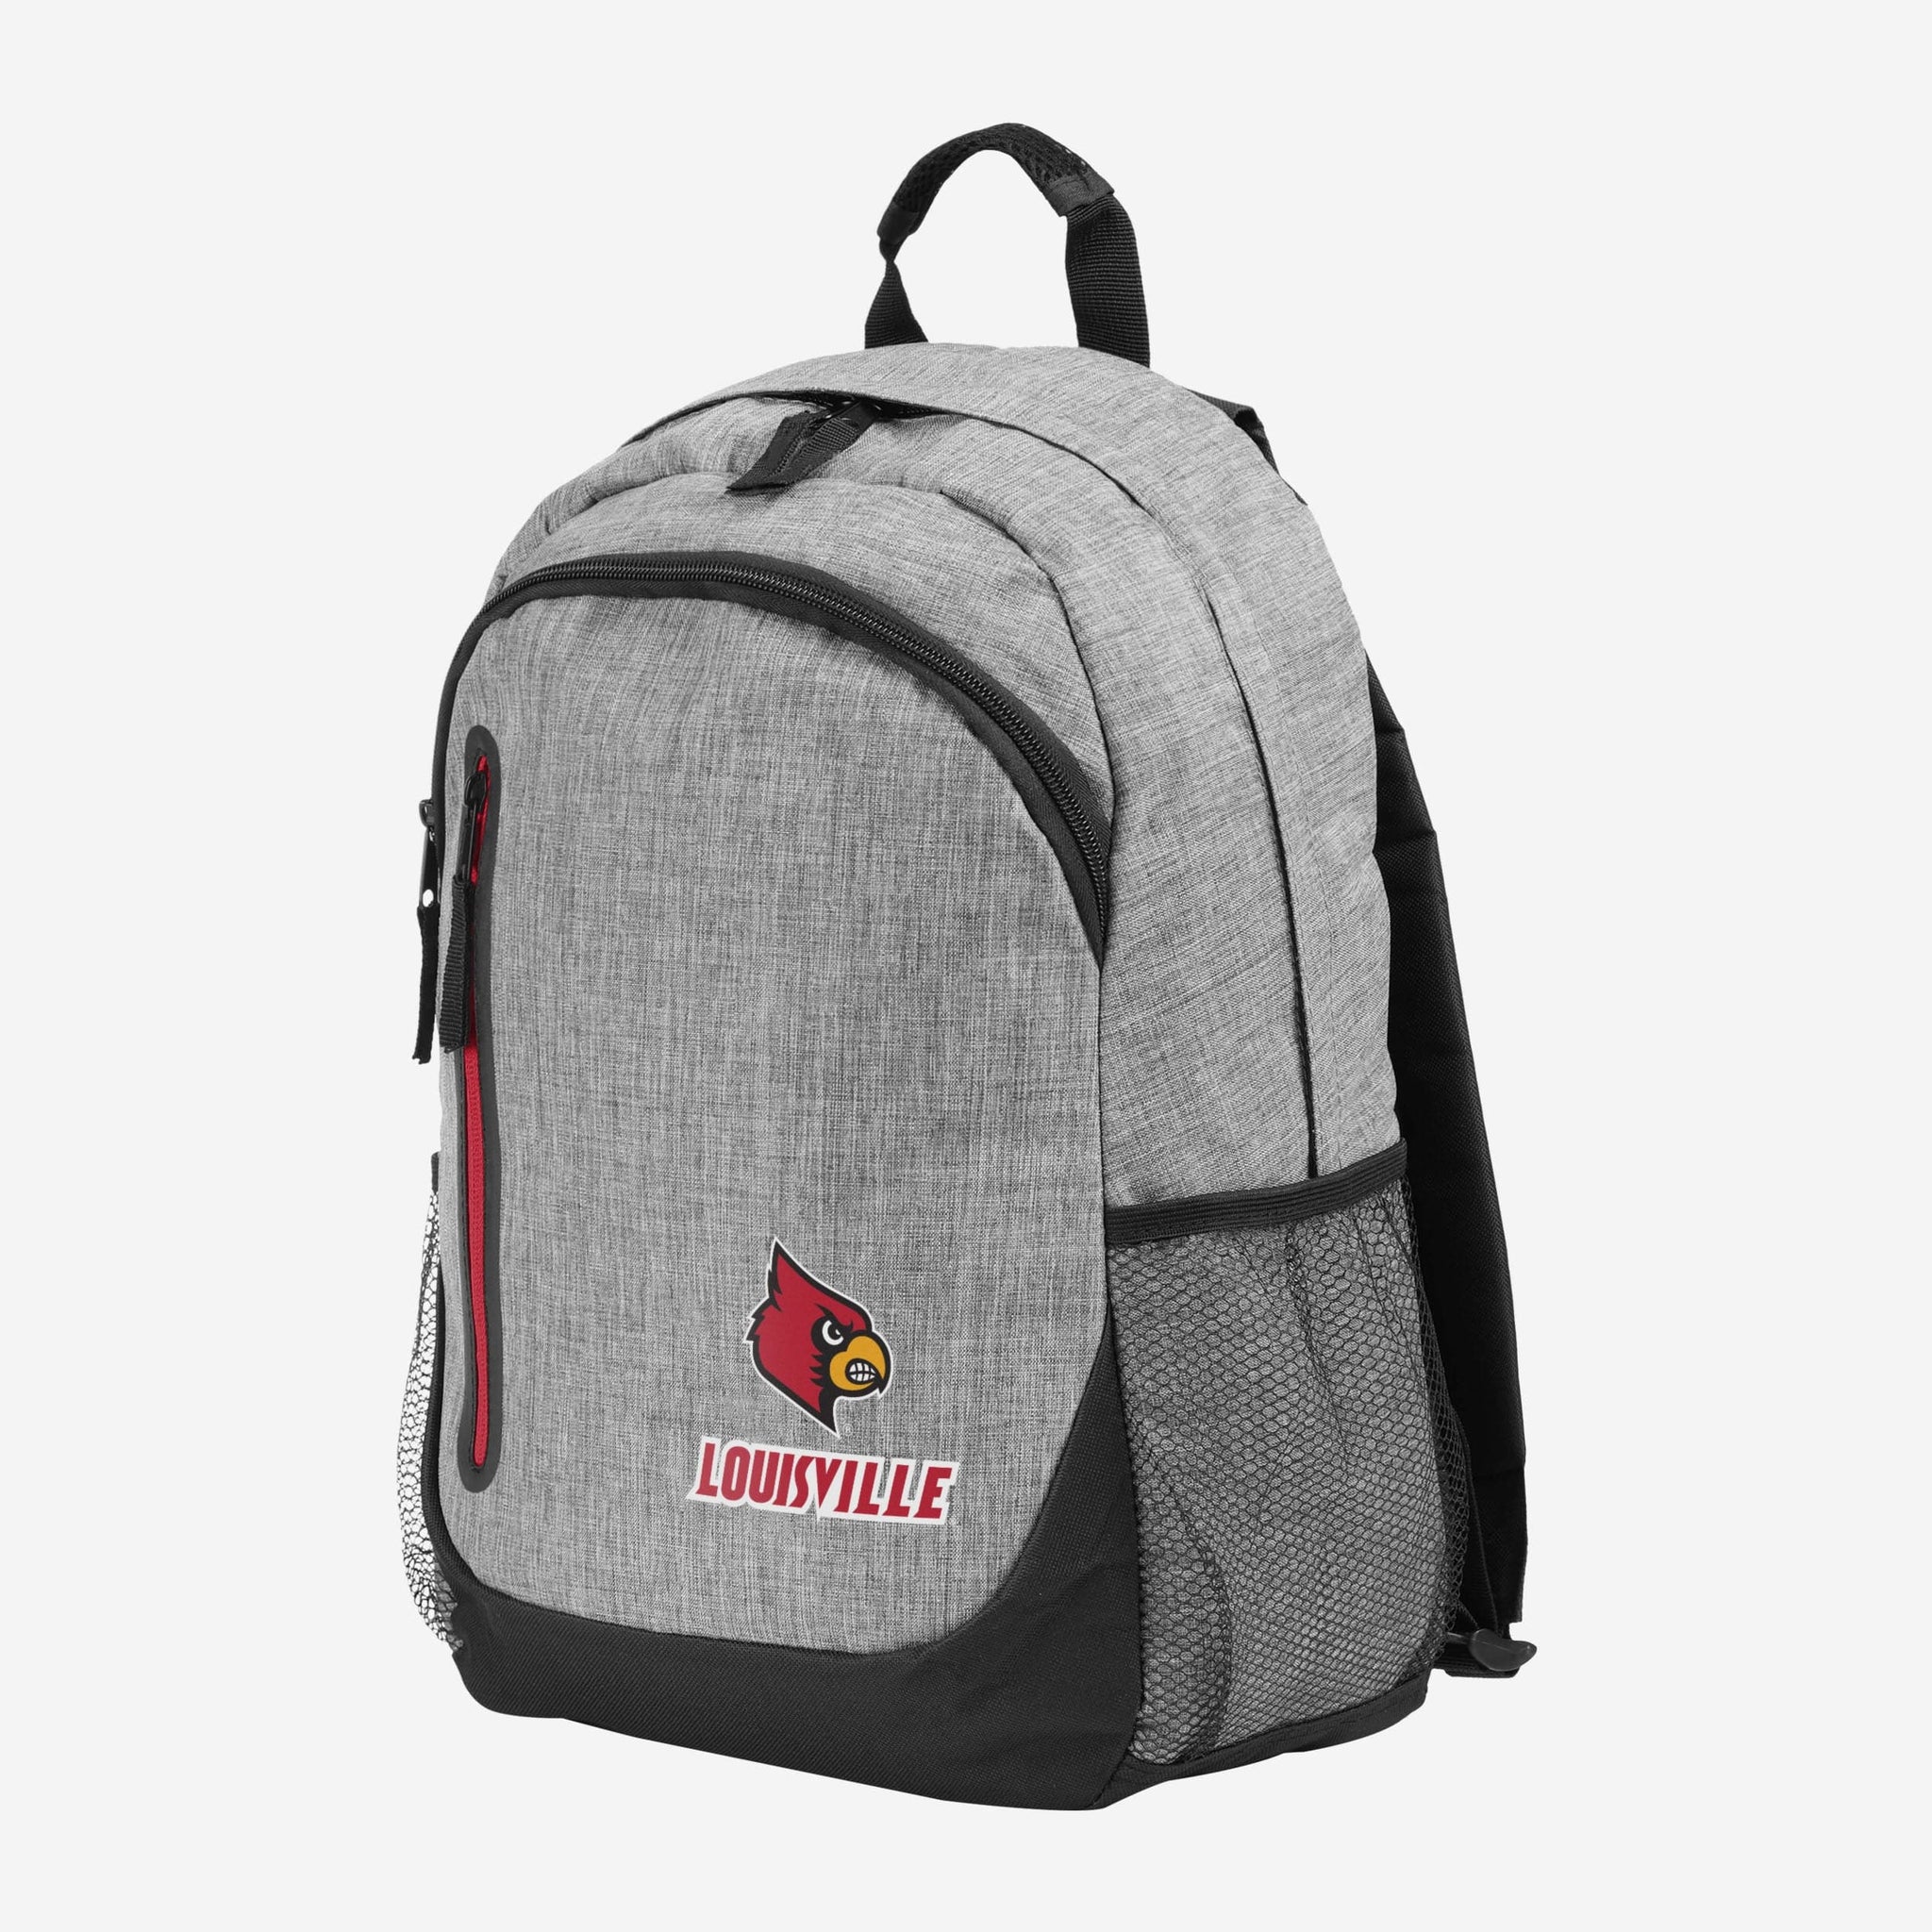 Louisville Backpack, Louisville Cardinals Bookbags, Laptop Bags